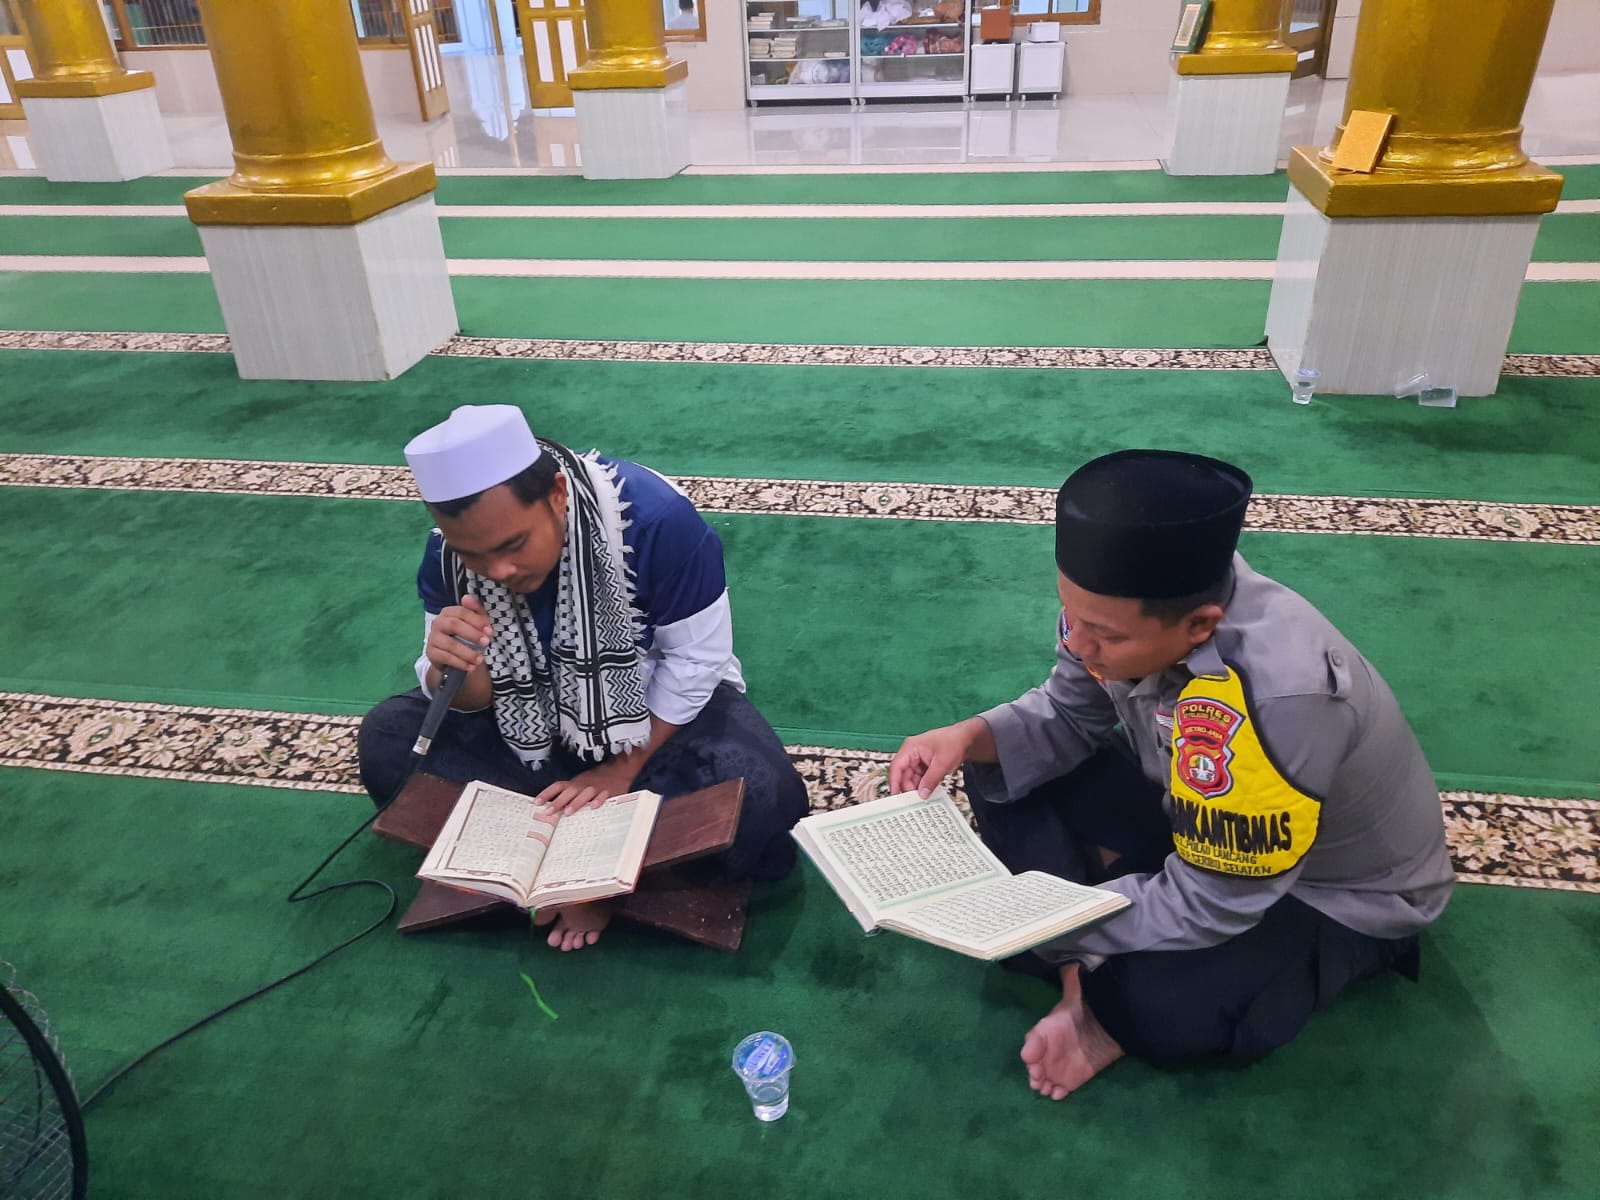 Bhabinkamtibmas Pulau Lancang Ajak Warga Perkuat Iman dan Silaturahmi Melalui Hataman dan Tadarus Quran